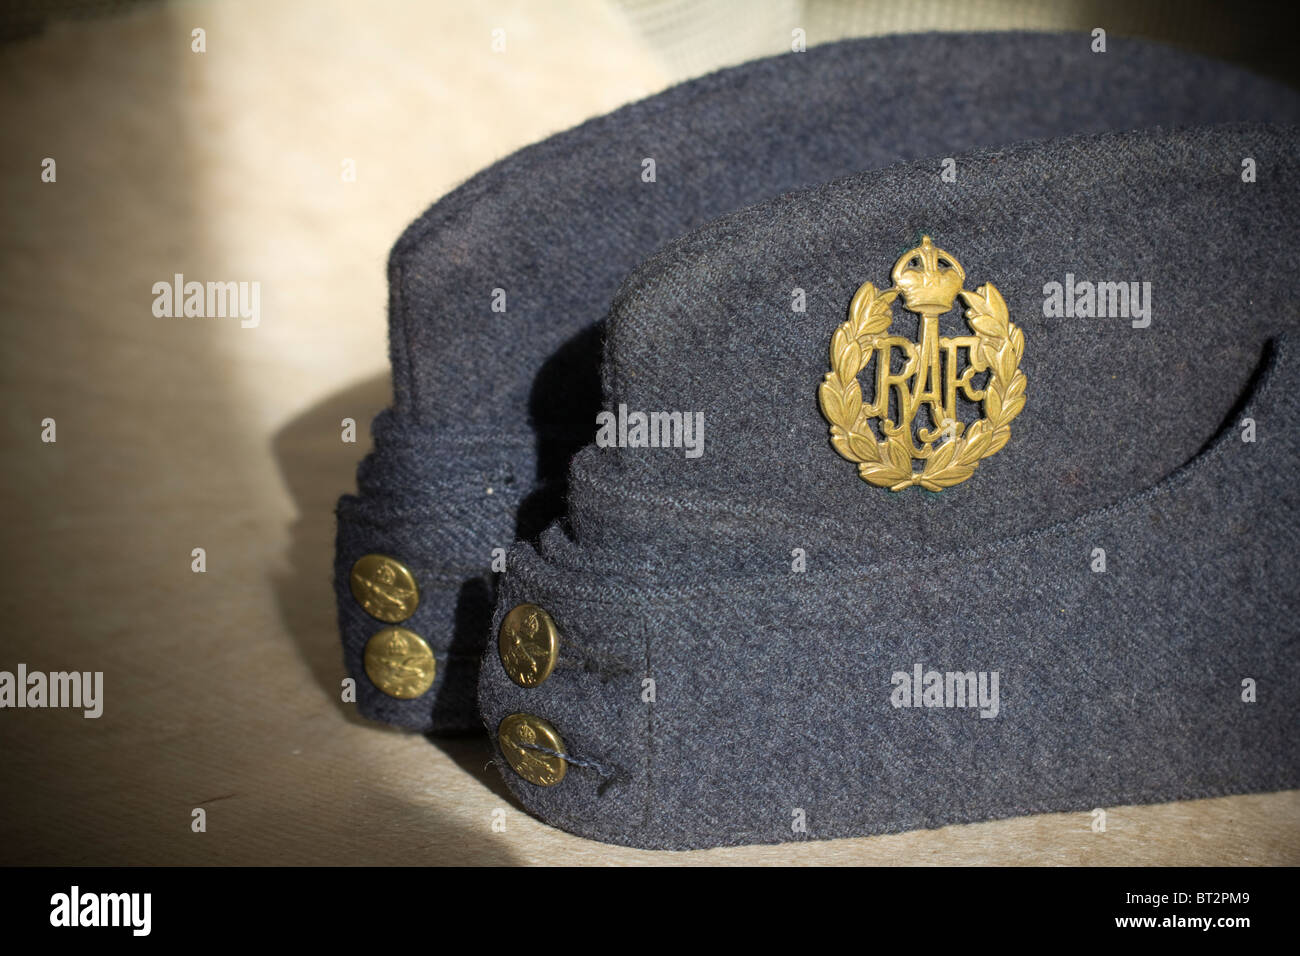 RAF Insignia, from WW2 world war 2 world war II on Beret cap hat Stock Photo